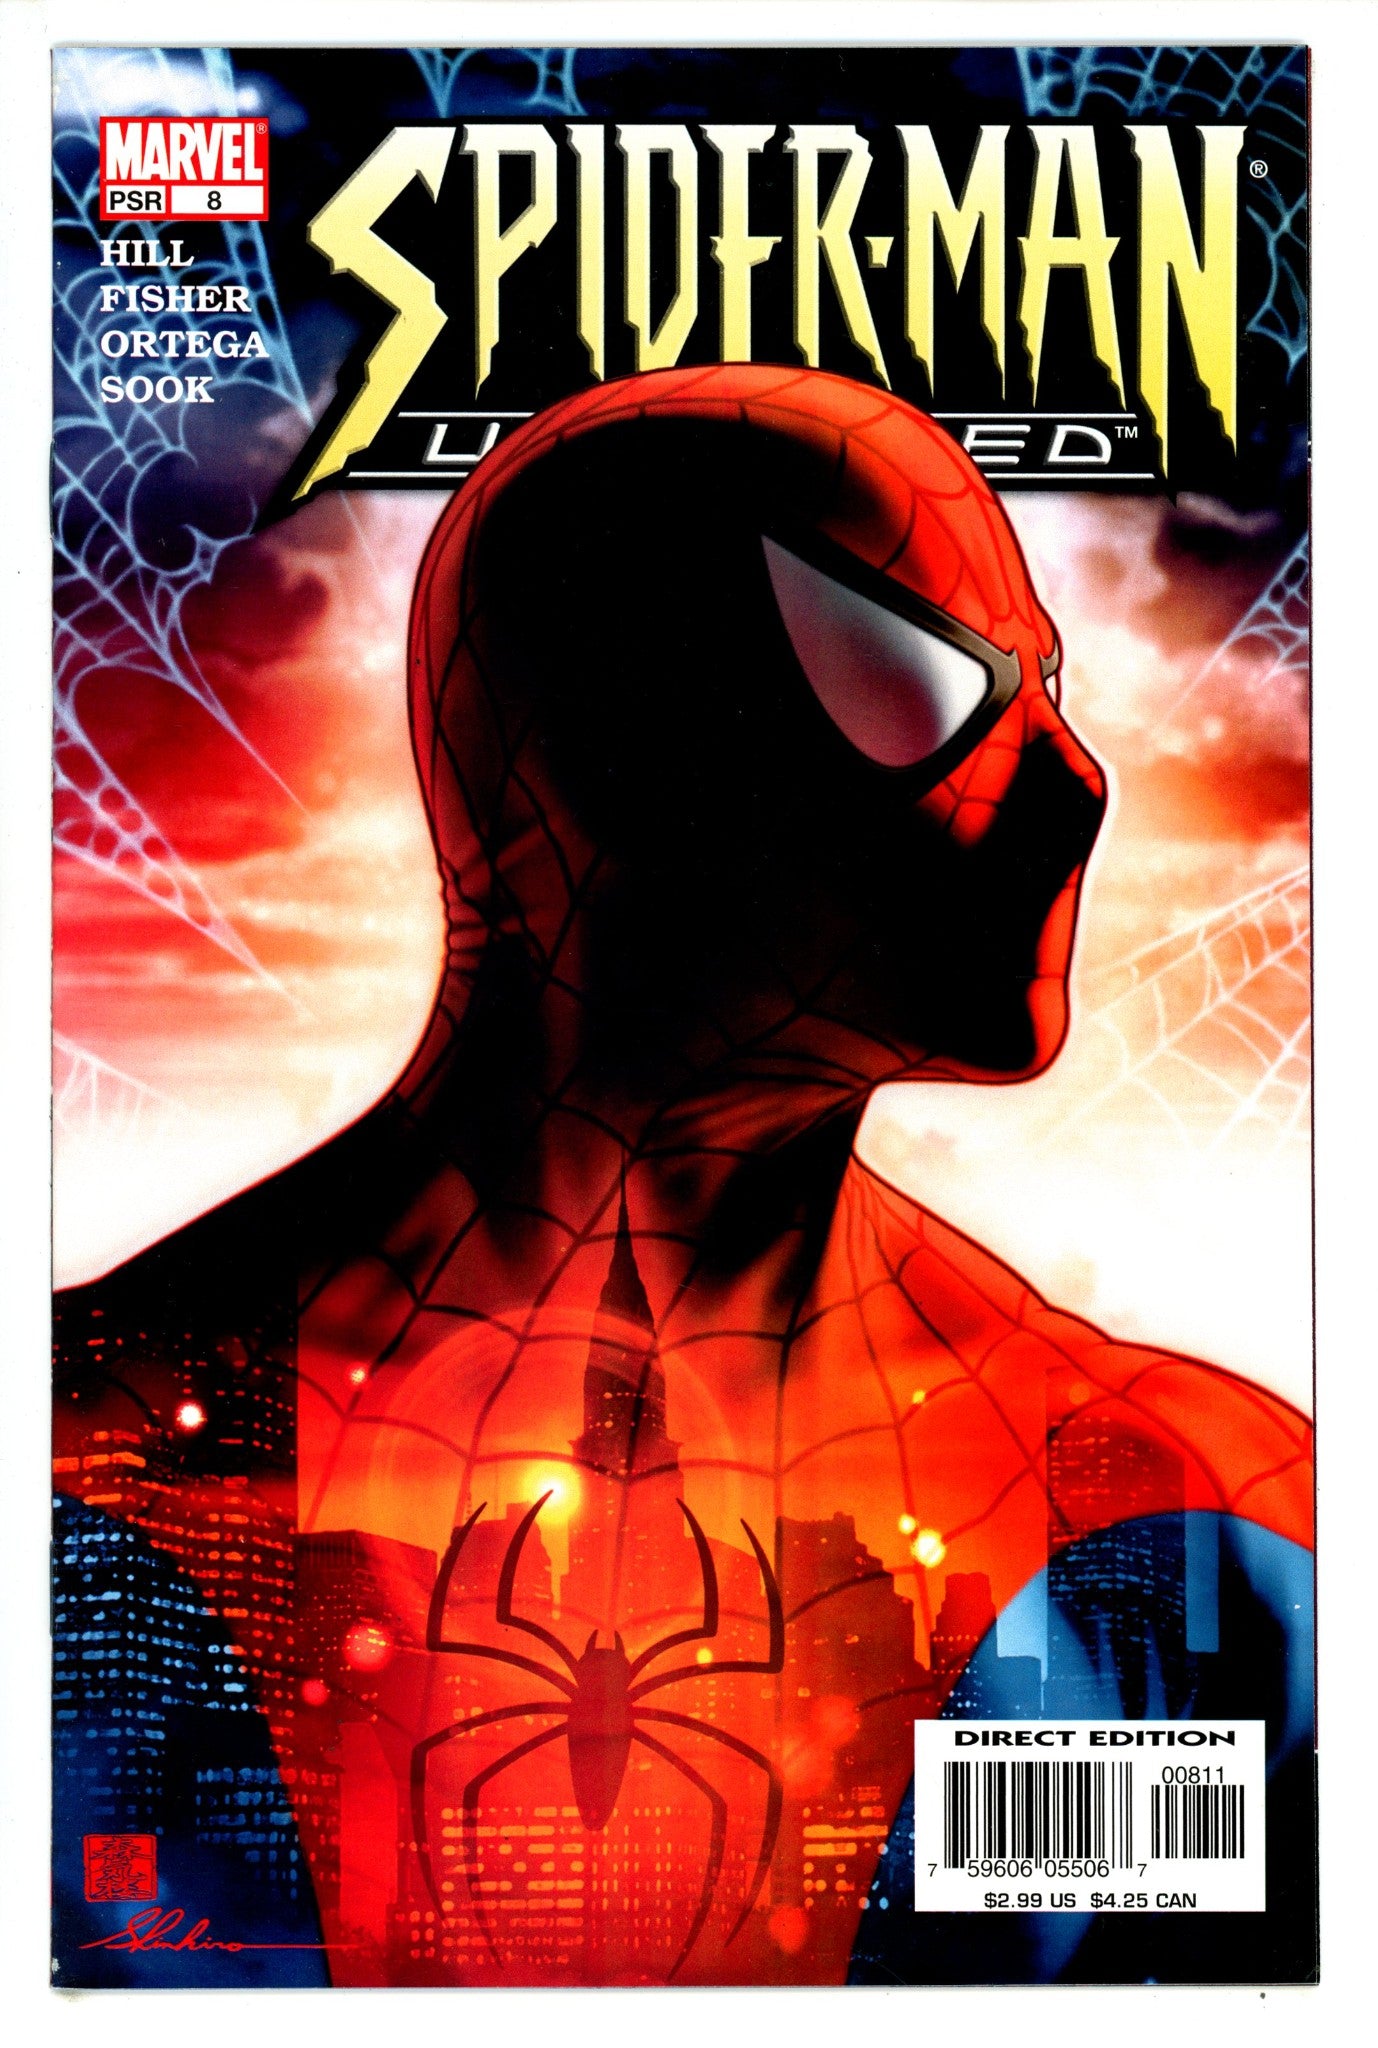 Spider-Man Unlimited Vol 3 8 NM- (9.2) (2005)